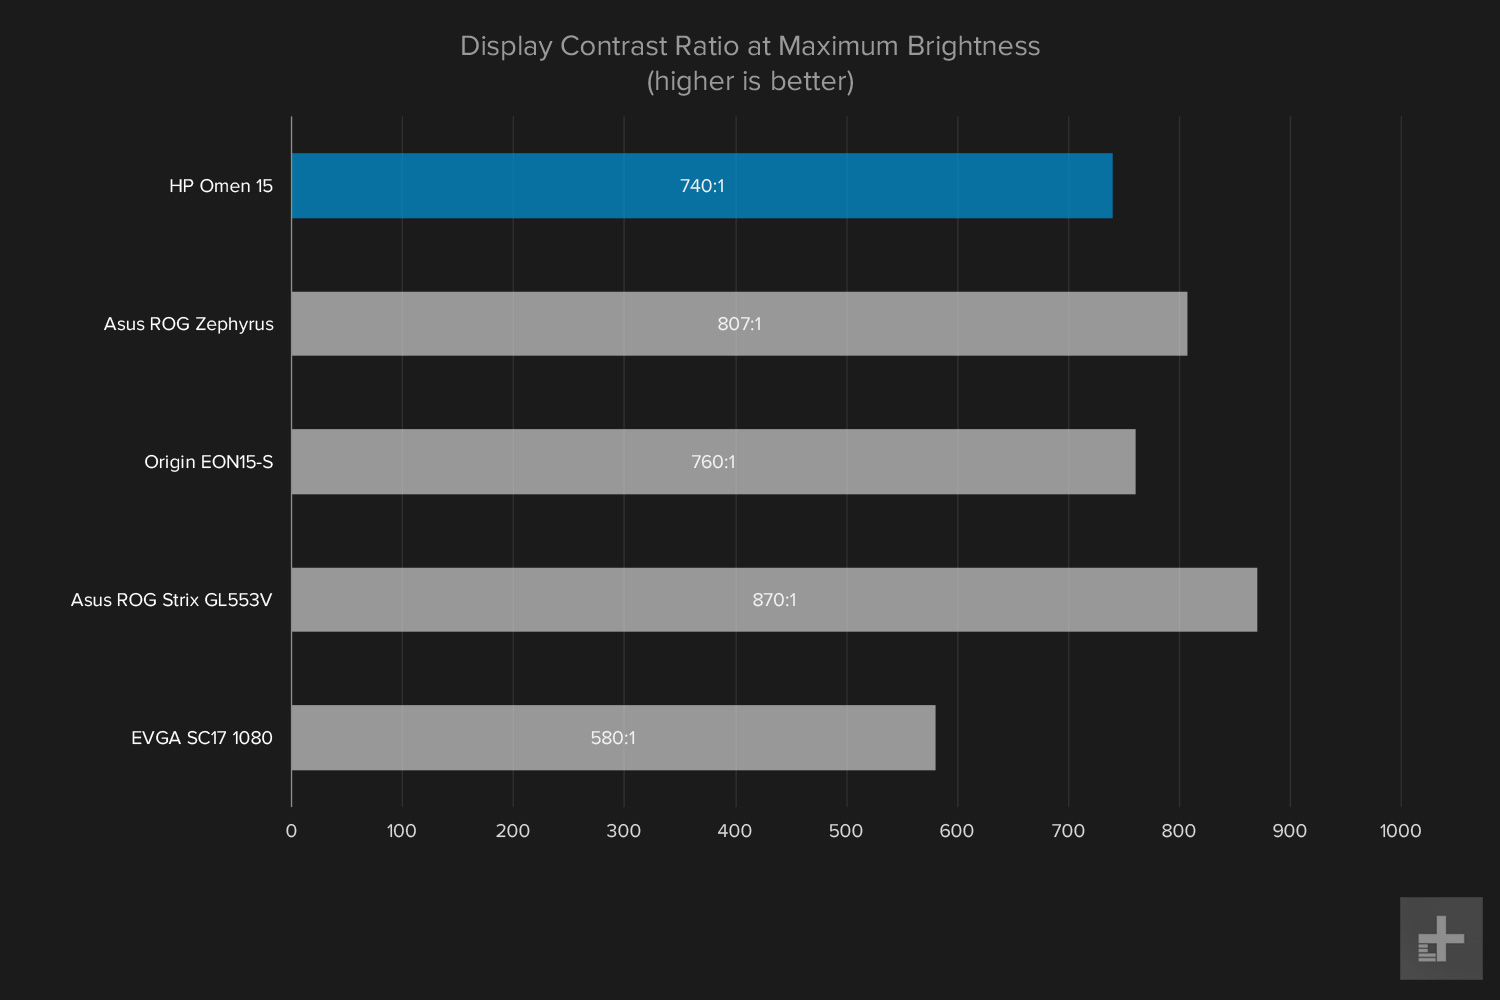 HP Omen benchmark graphs Display Contrast Ratio